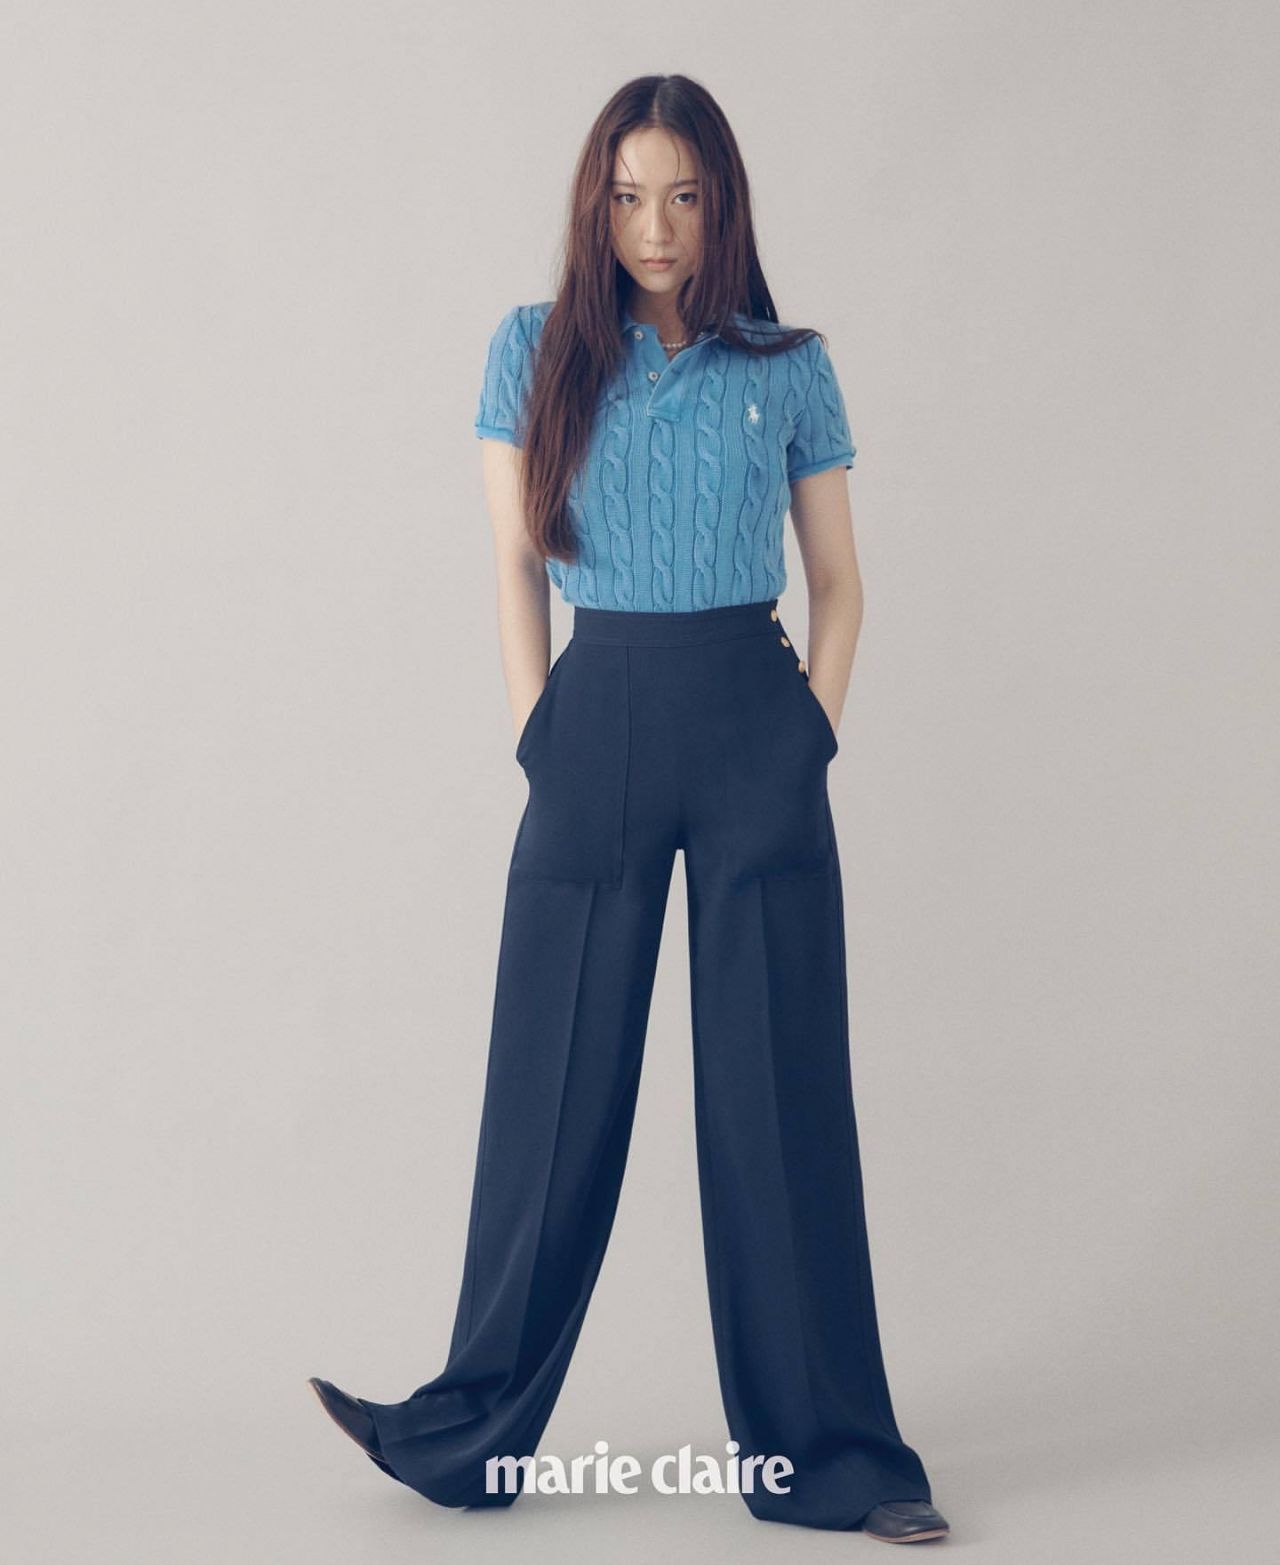 Krystal Jung in Polo Ralph Lauren - Photoshoot Marie Claire Magazine Korea  April 2021 • CelebMafia